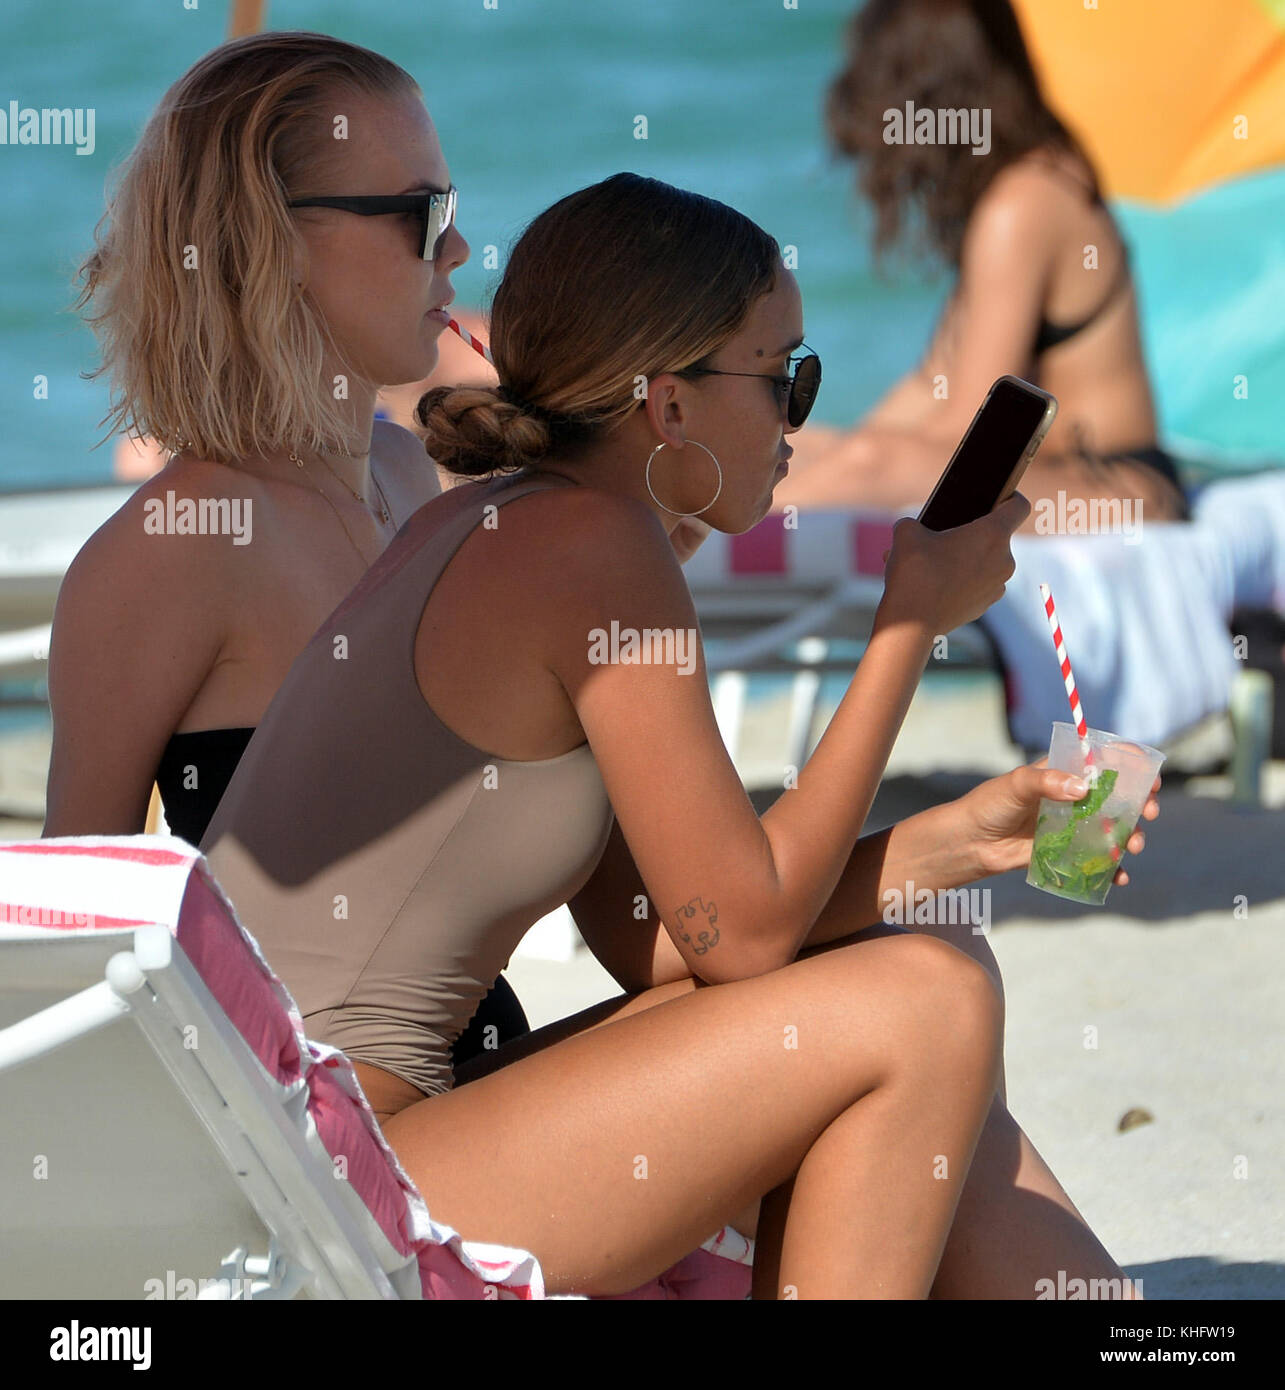 Miami Beach, FL - 24 de junio: diseñador de moda australiana, Bianca  elouise, parece descuidada en un bikini de dos piezas negro mientras toma  un baño con Scott disick's x-novia modelo j